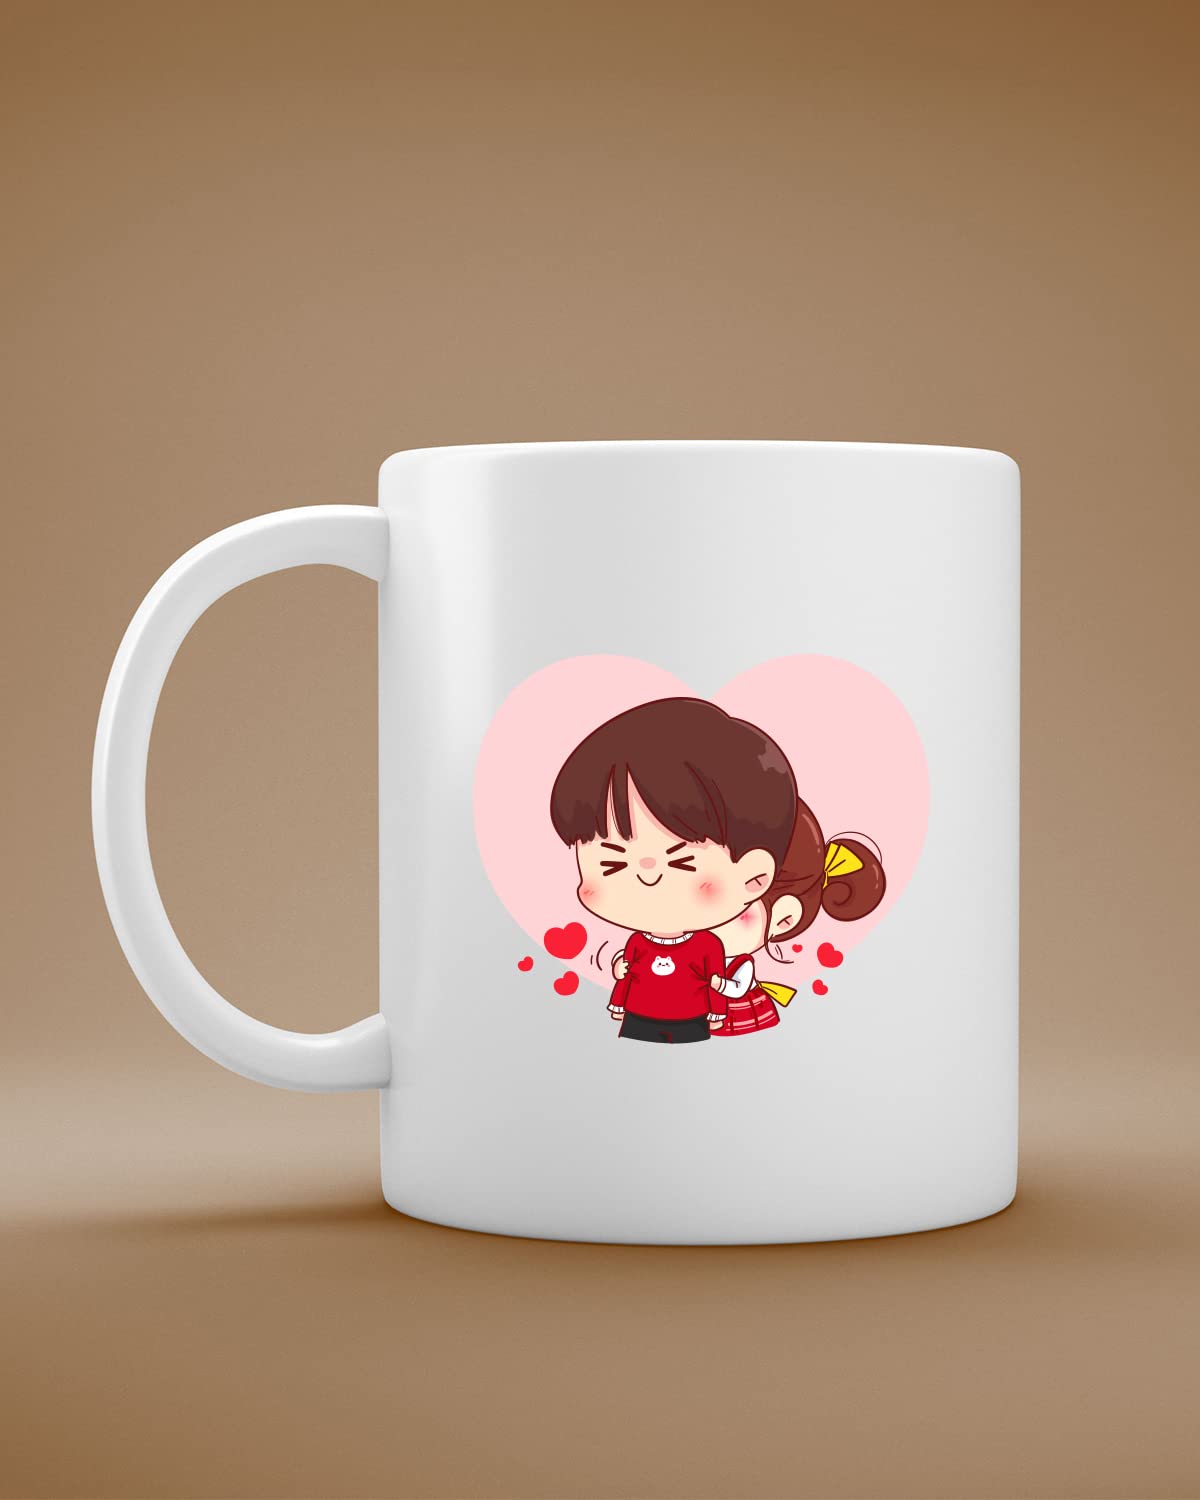 Love Theme Coffee Mug - Valentines Day Gift for Wife Husband Girlfriend Boyfriend | Romantic Printed Coffee Mug for Birthday, Anniversary Gift